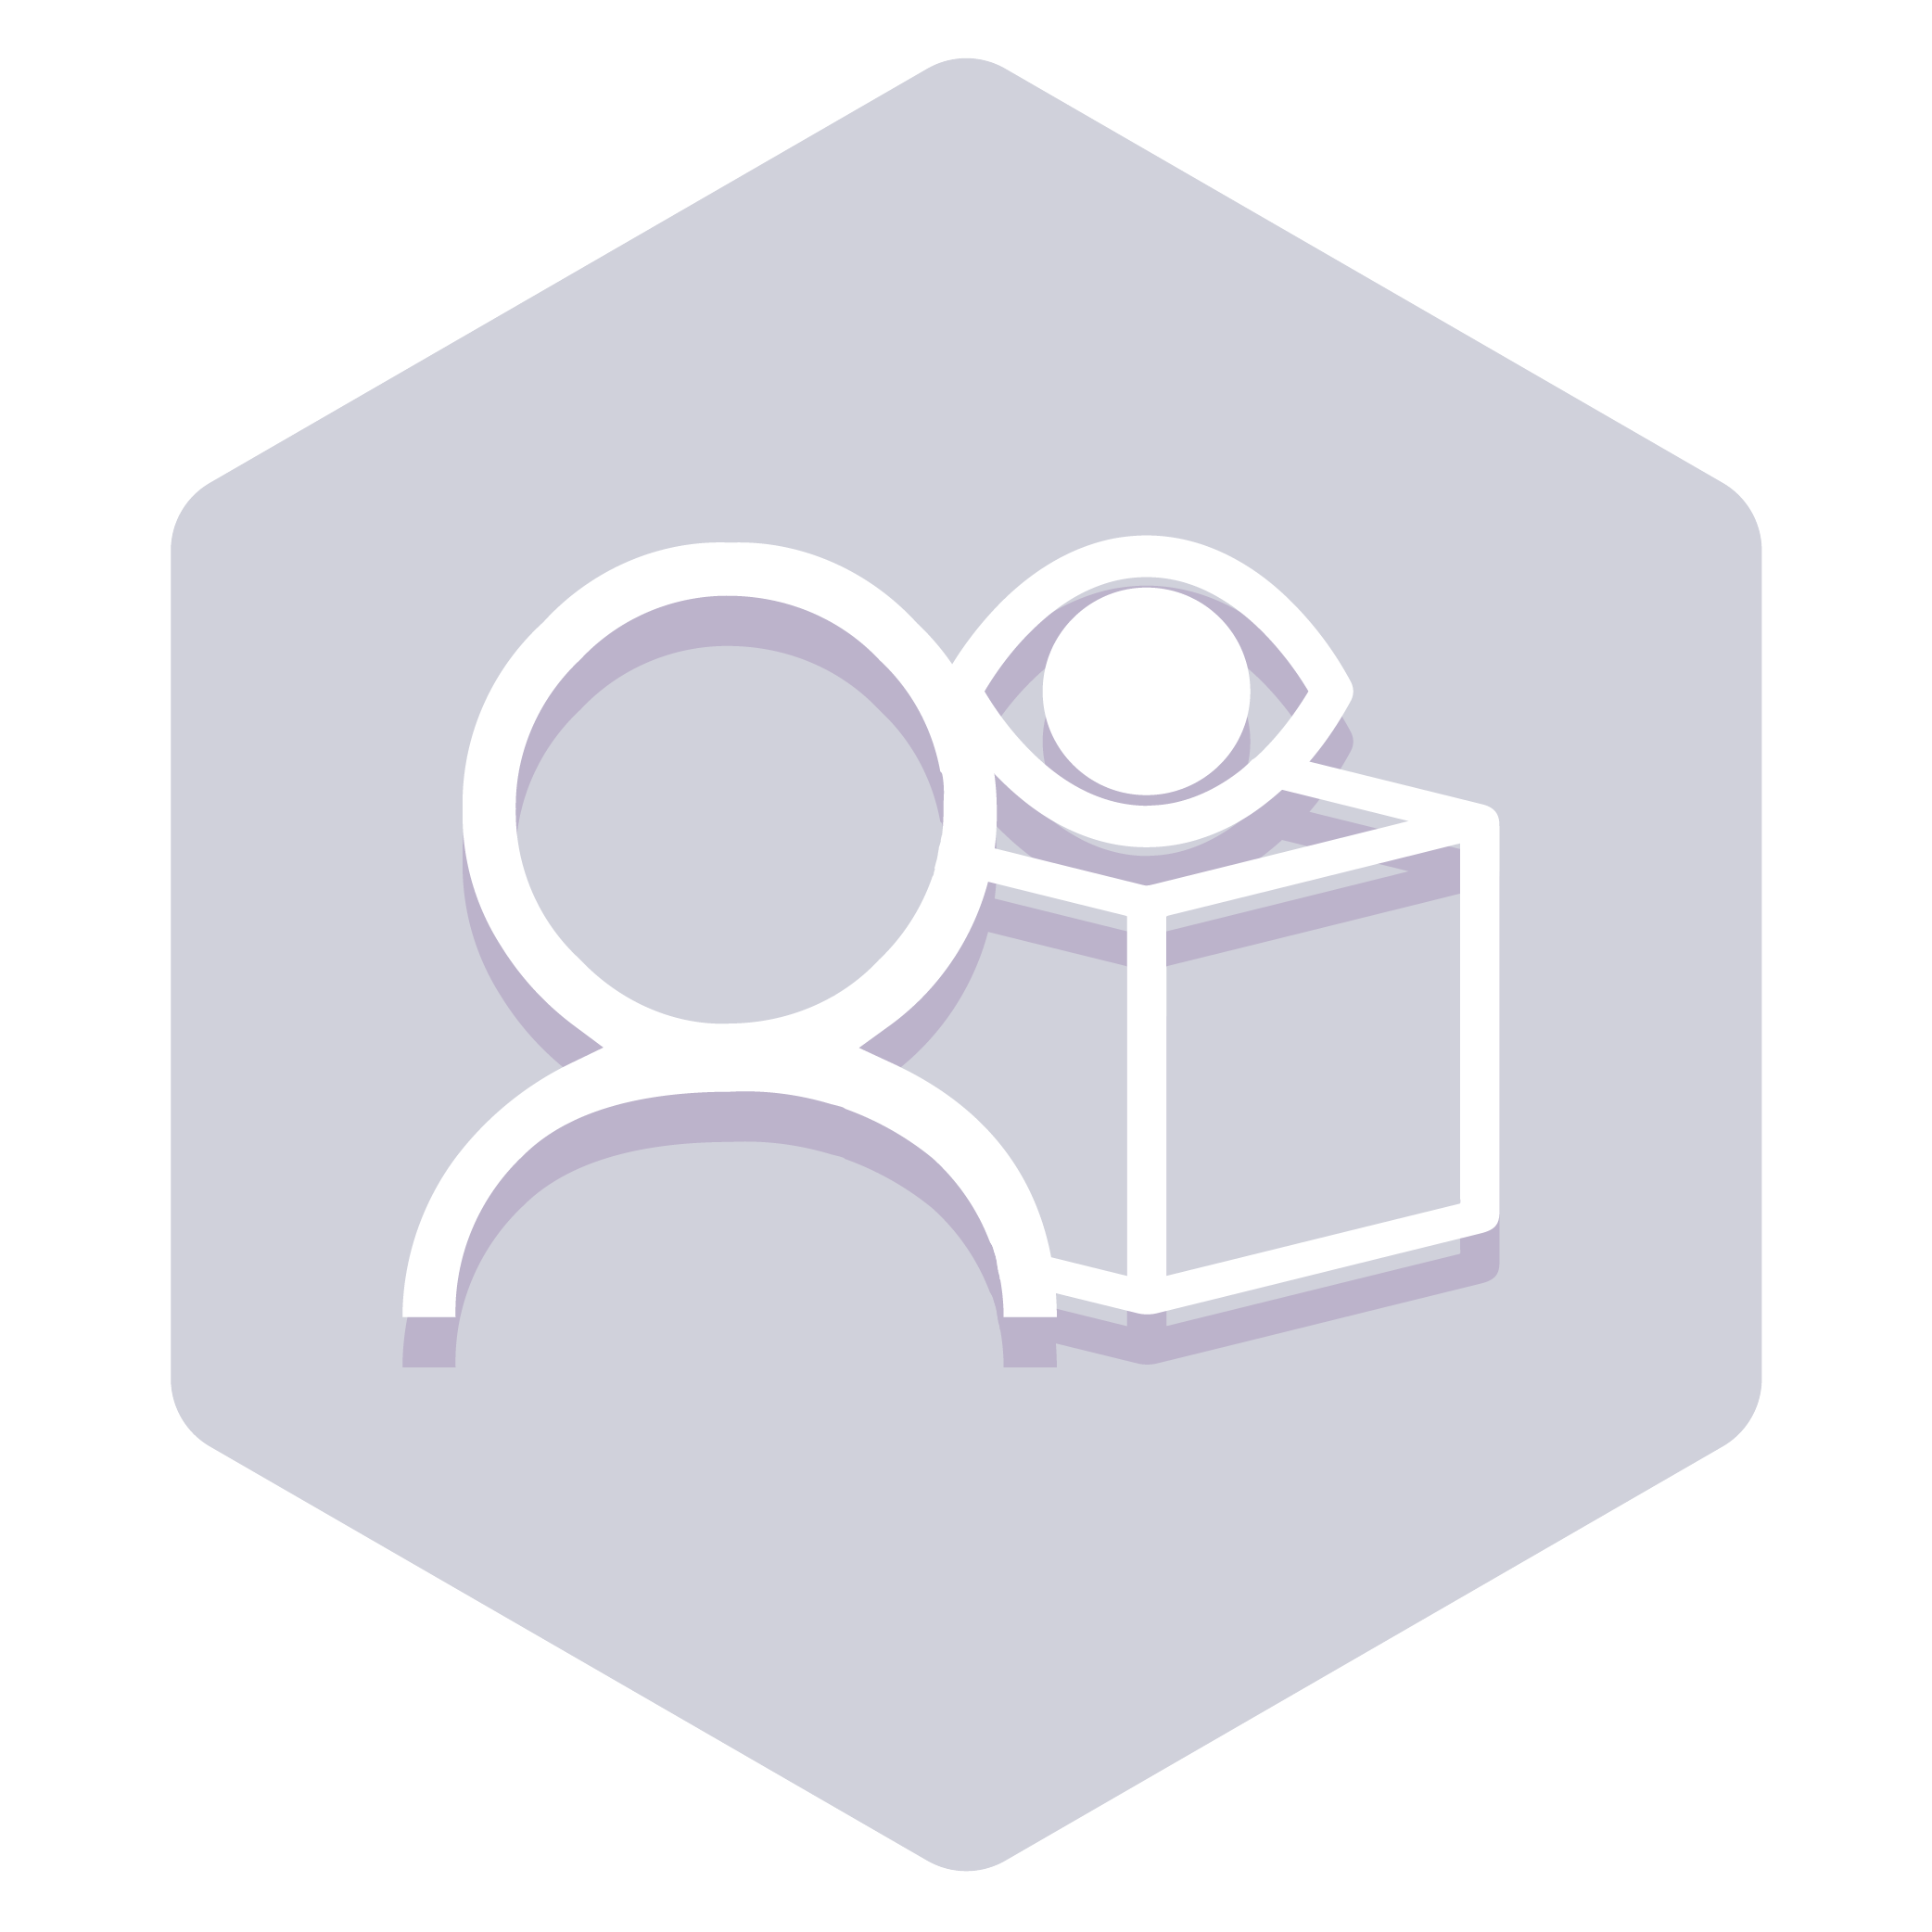 mission badge: Deployment Manager for 1:1 Customer Engagement